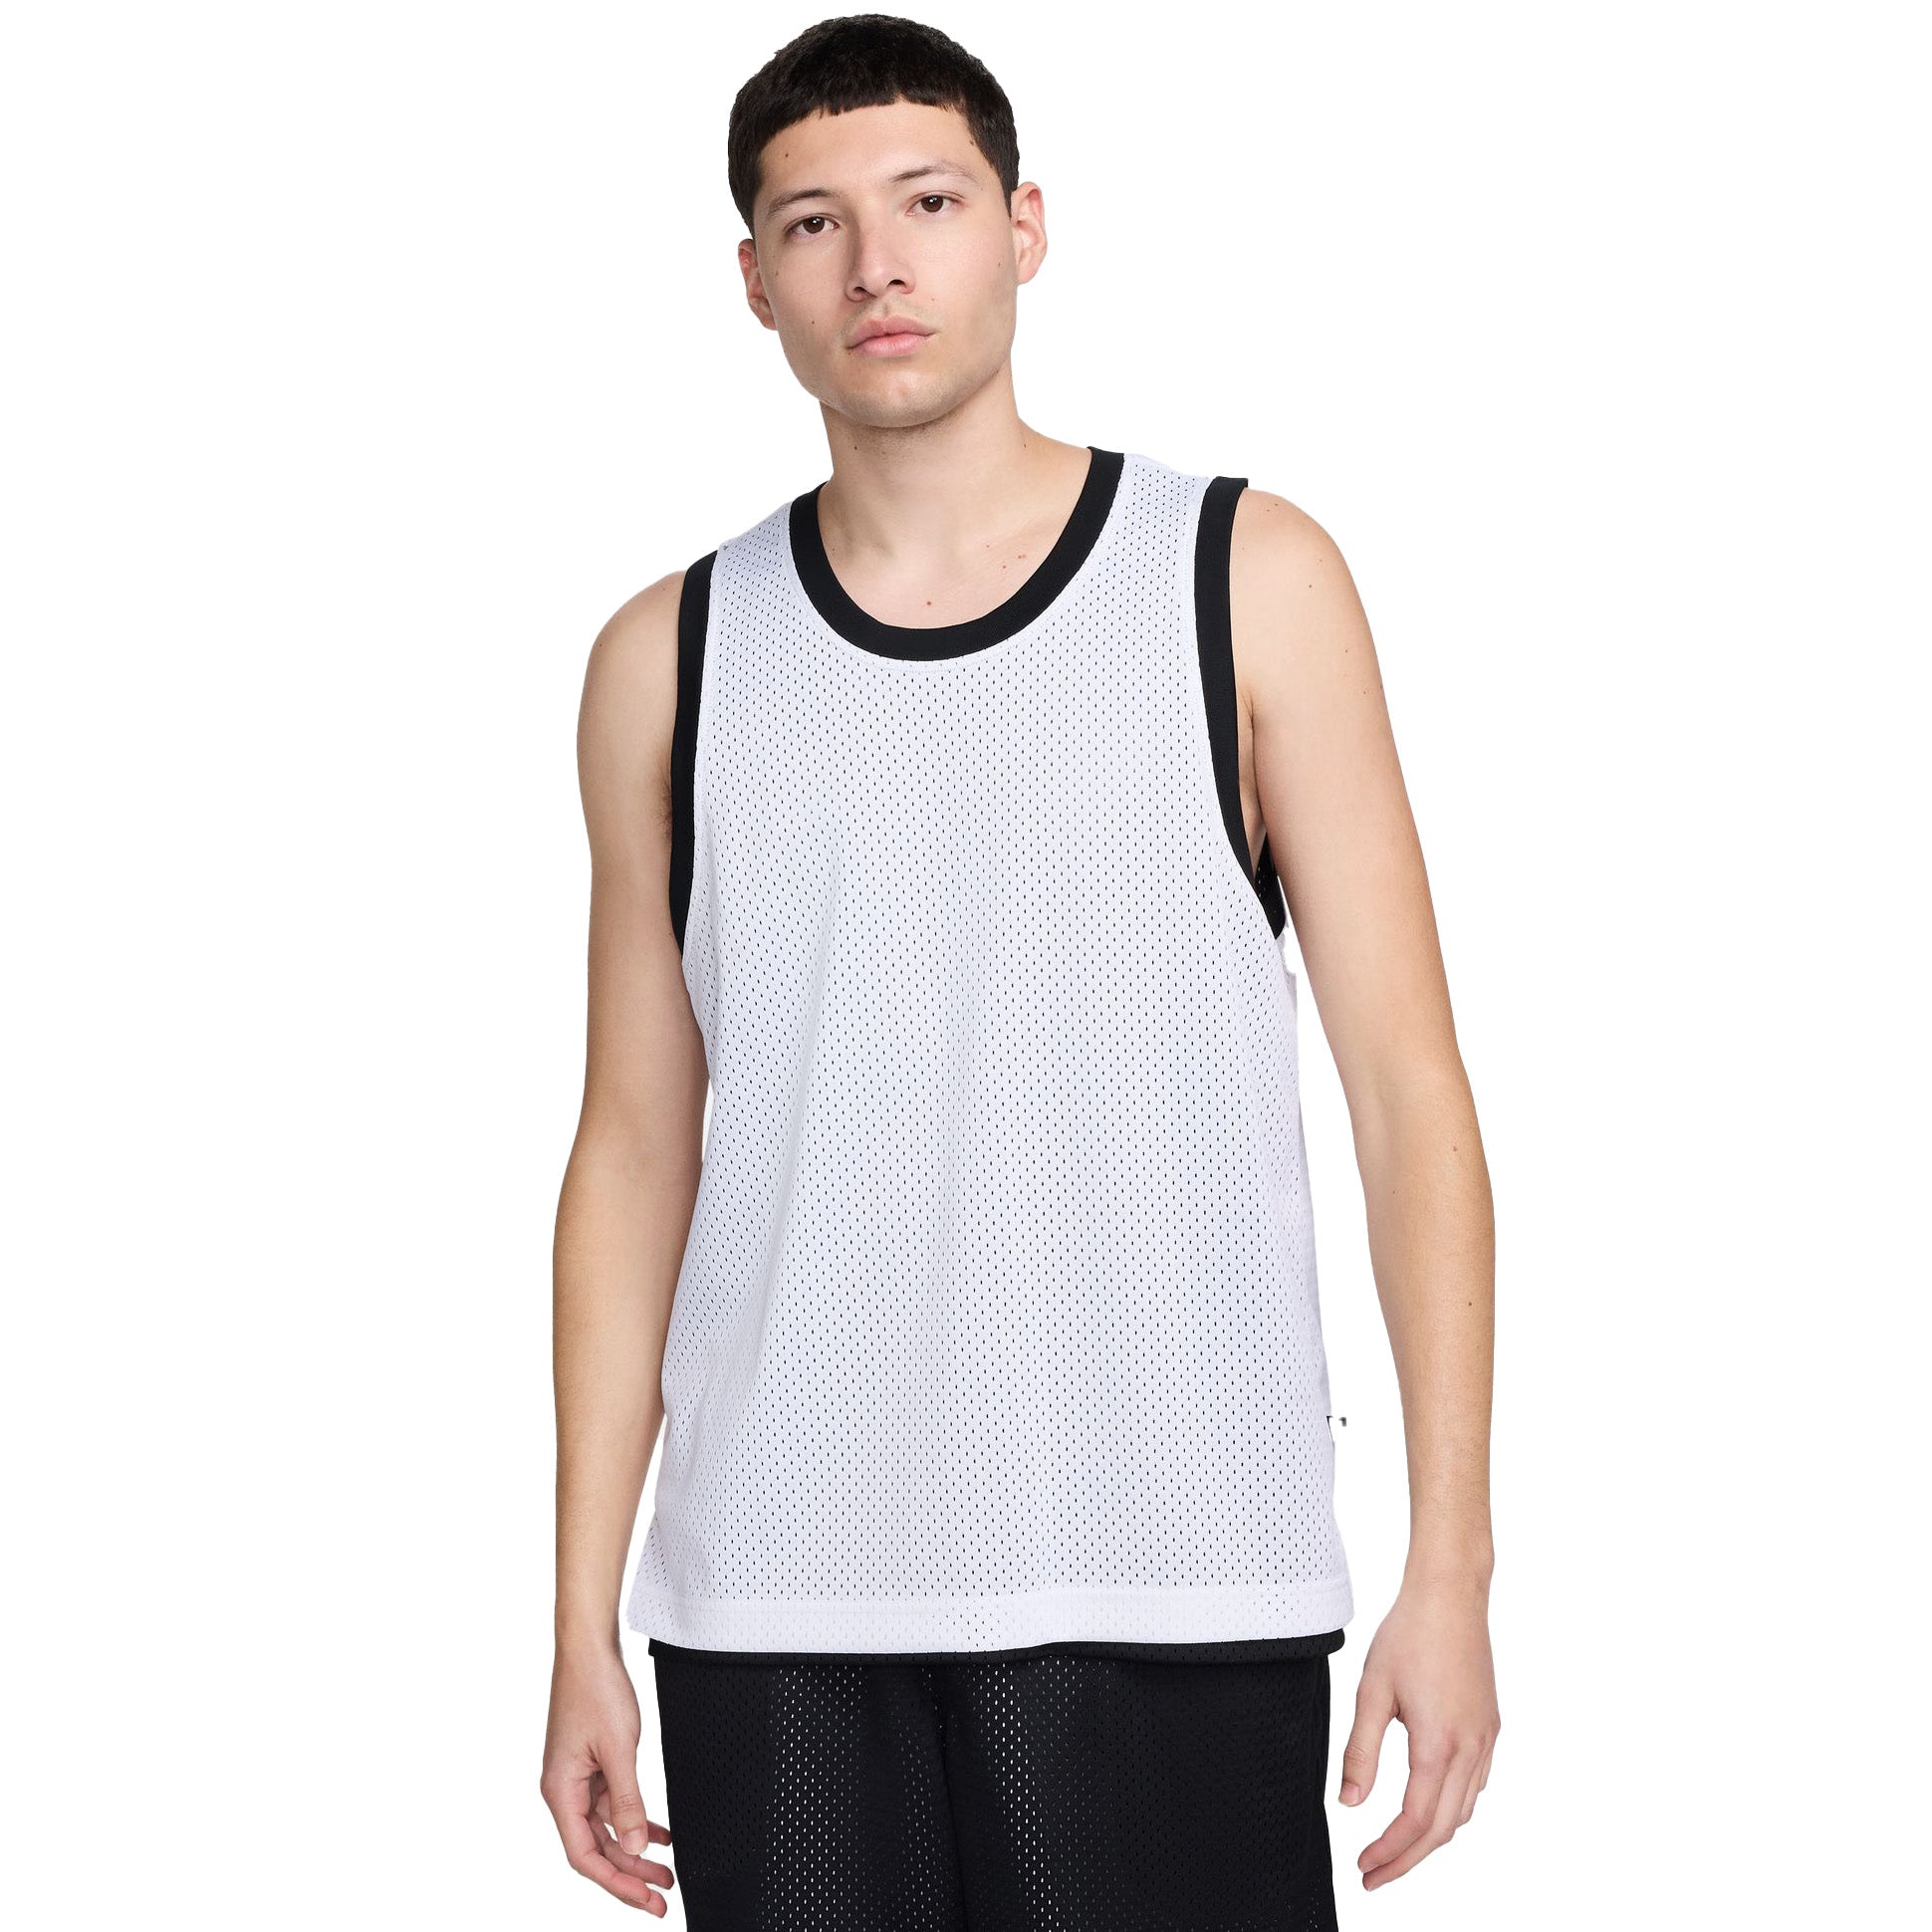 Nike SB Reversible Basketball Jersey Black/White